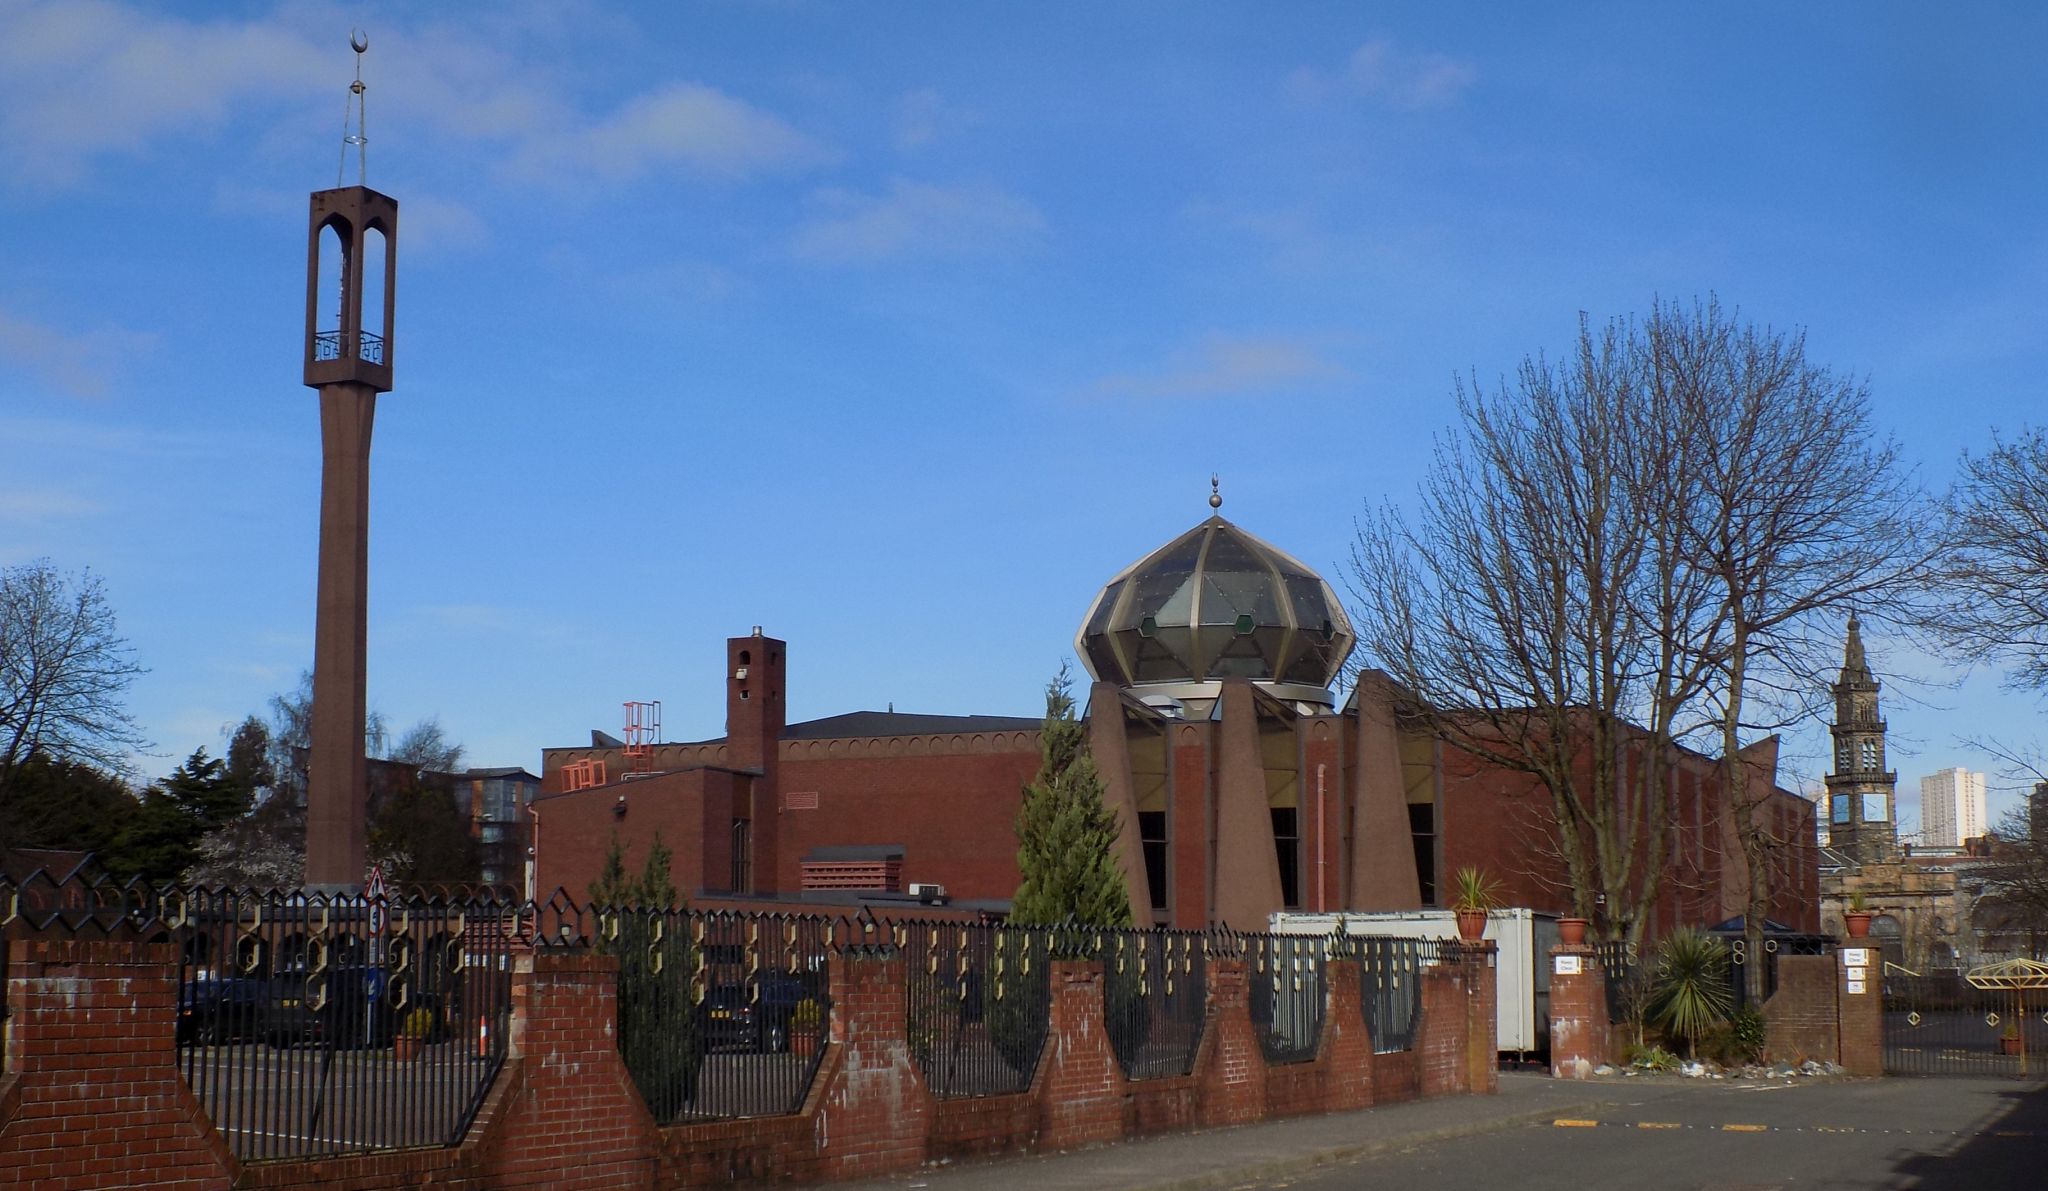 Central Mosque in Glasgow, Scotland